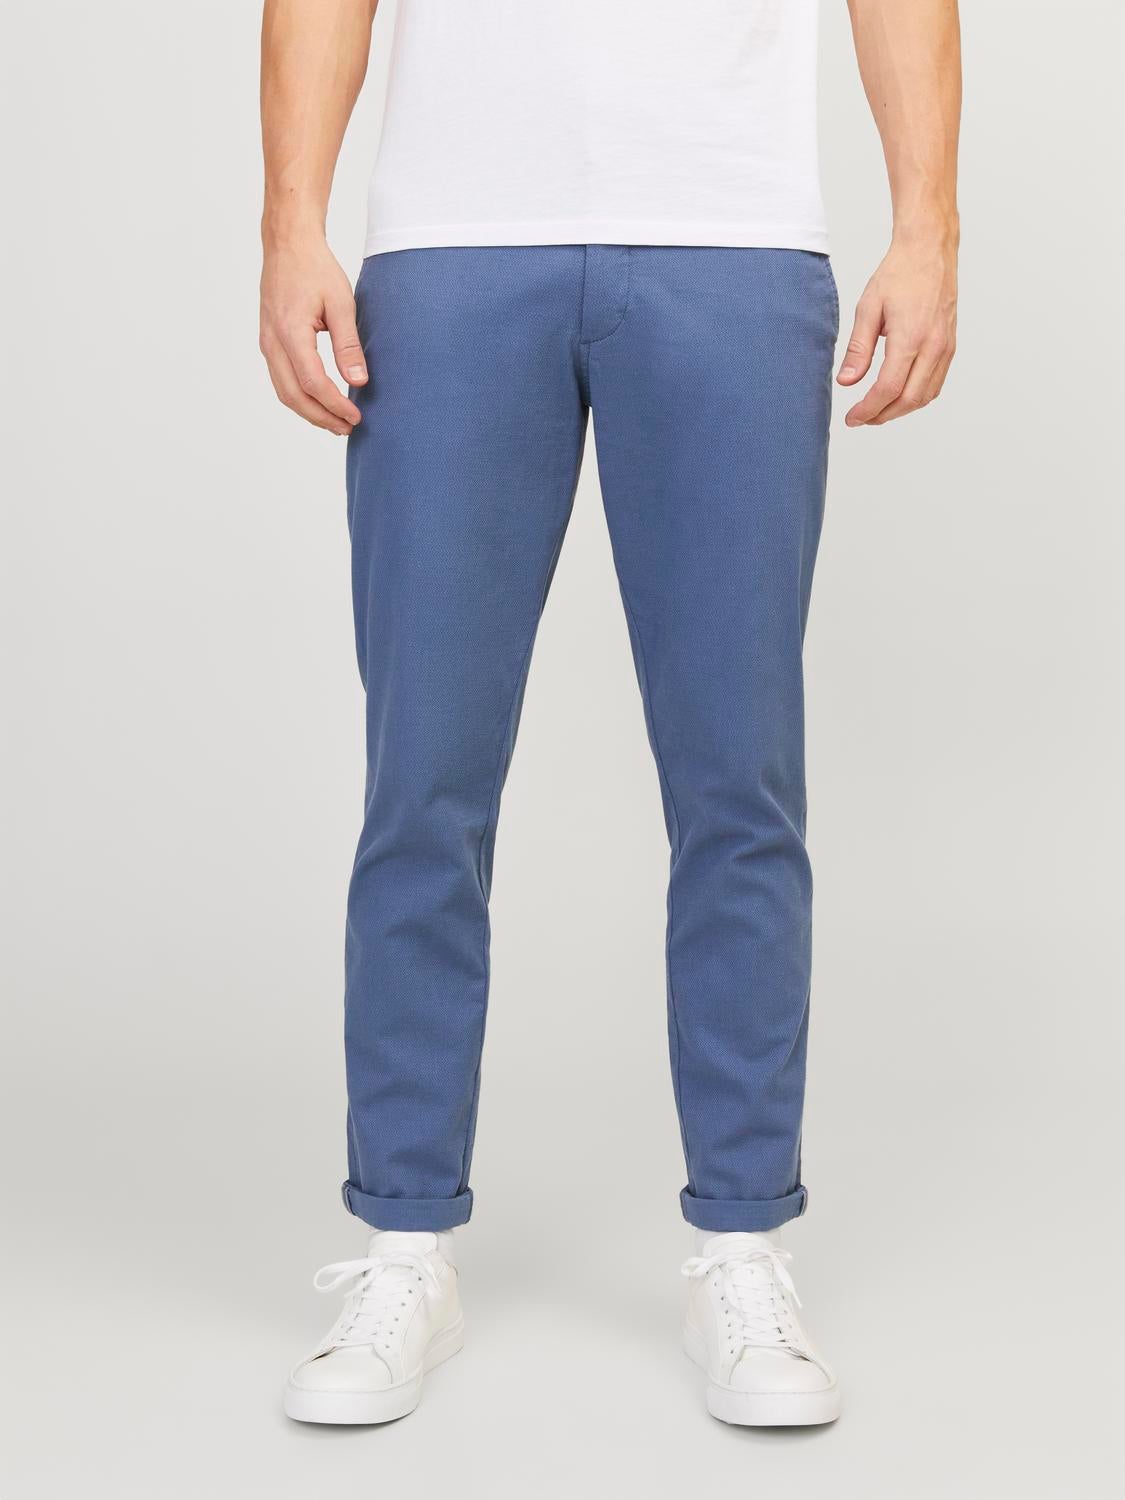 Suit trousers Super skinny fit - Light blue - Men | H&M IN